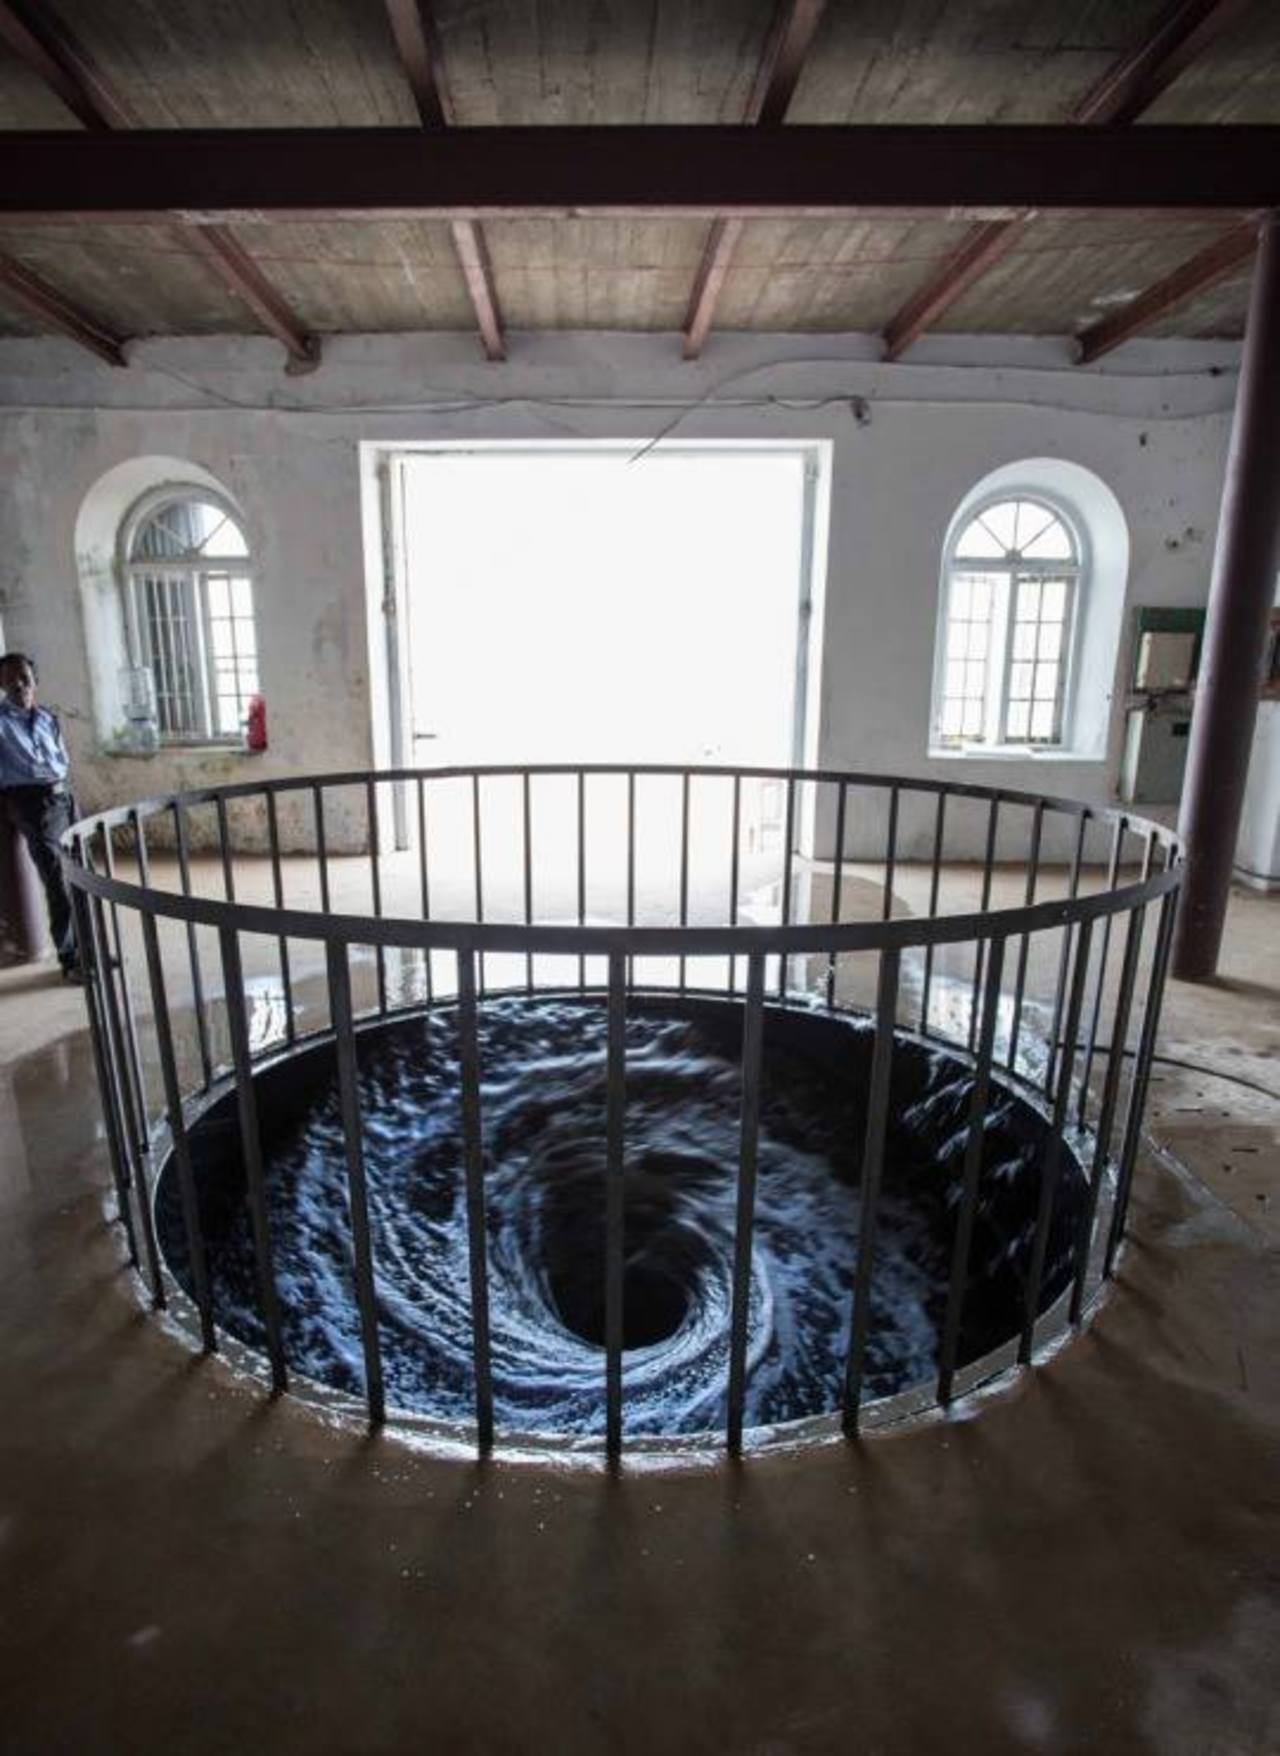 Anish Kapoor installations
#installation #art http://t.co/AwCH4jjioK